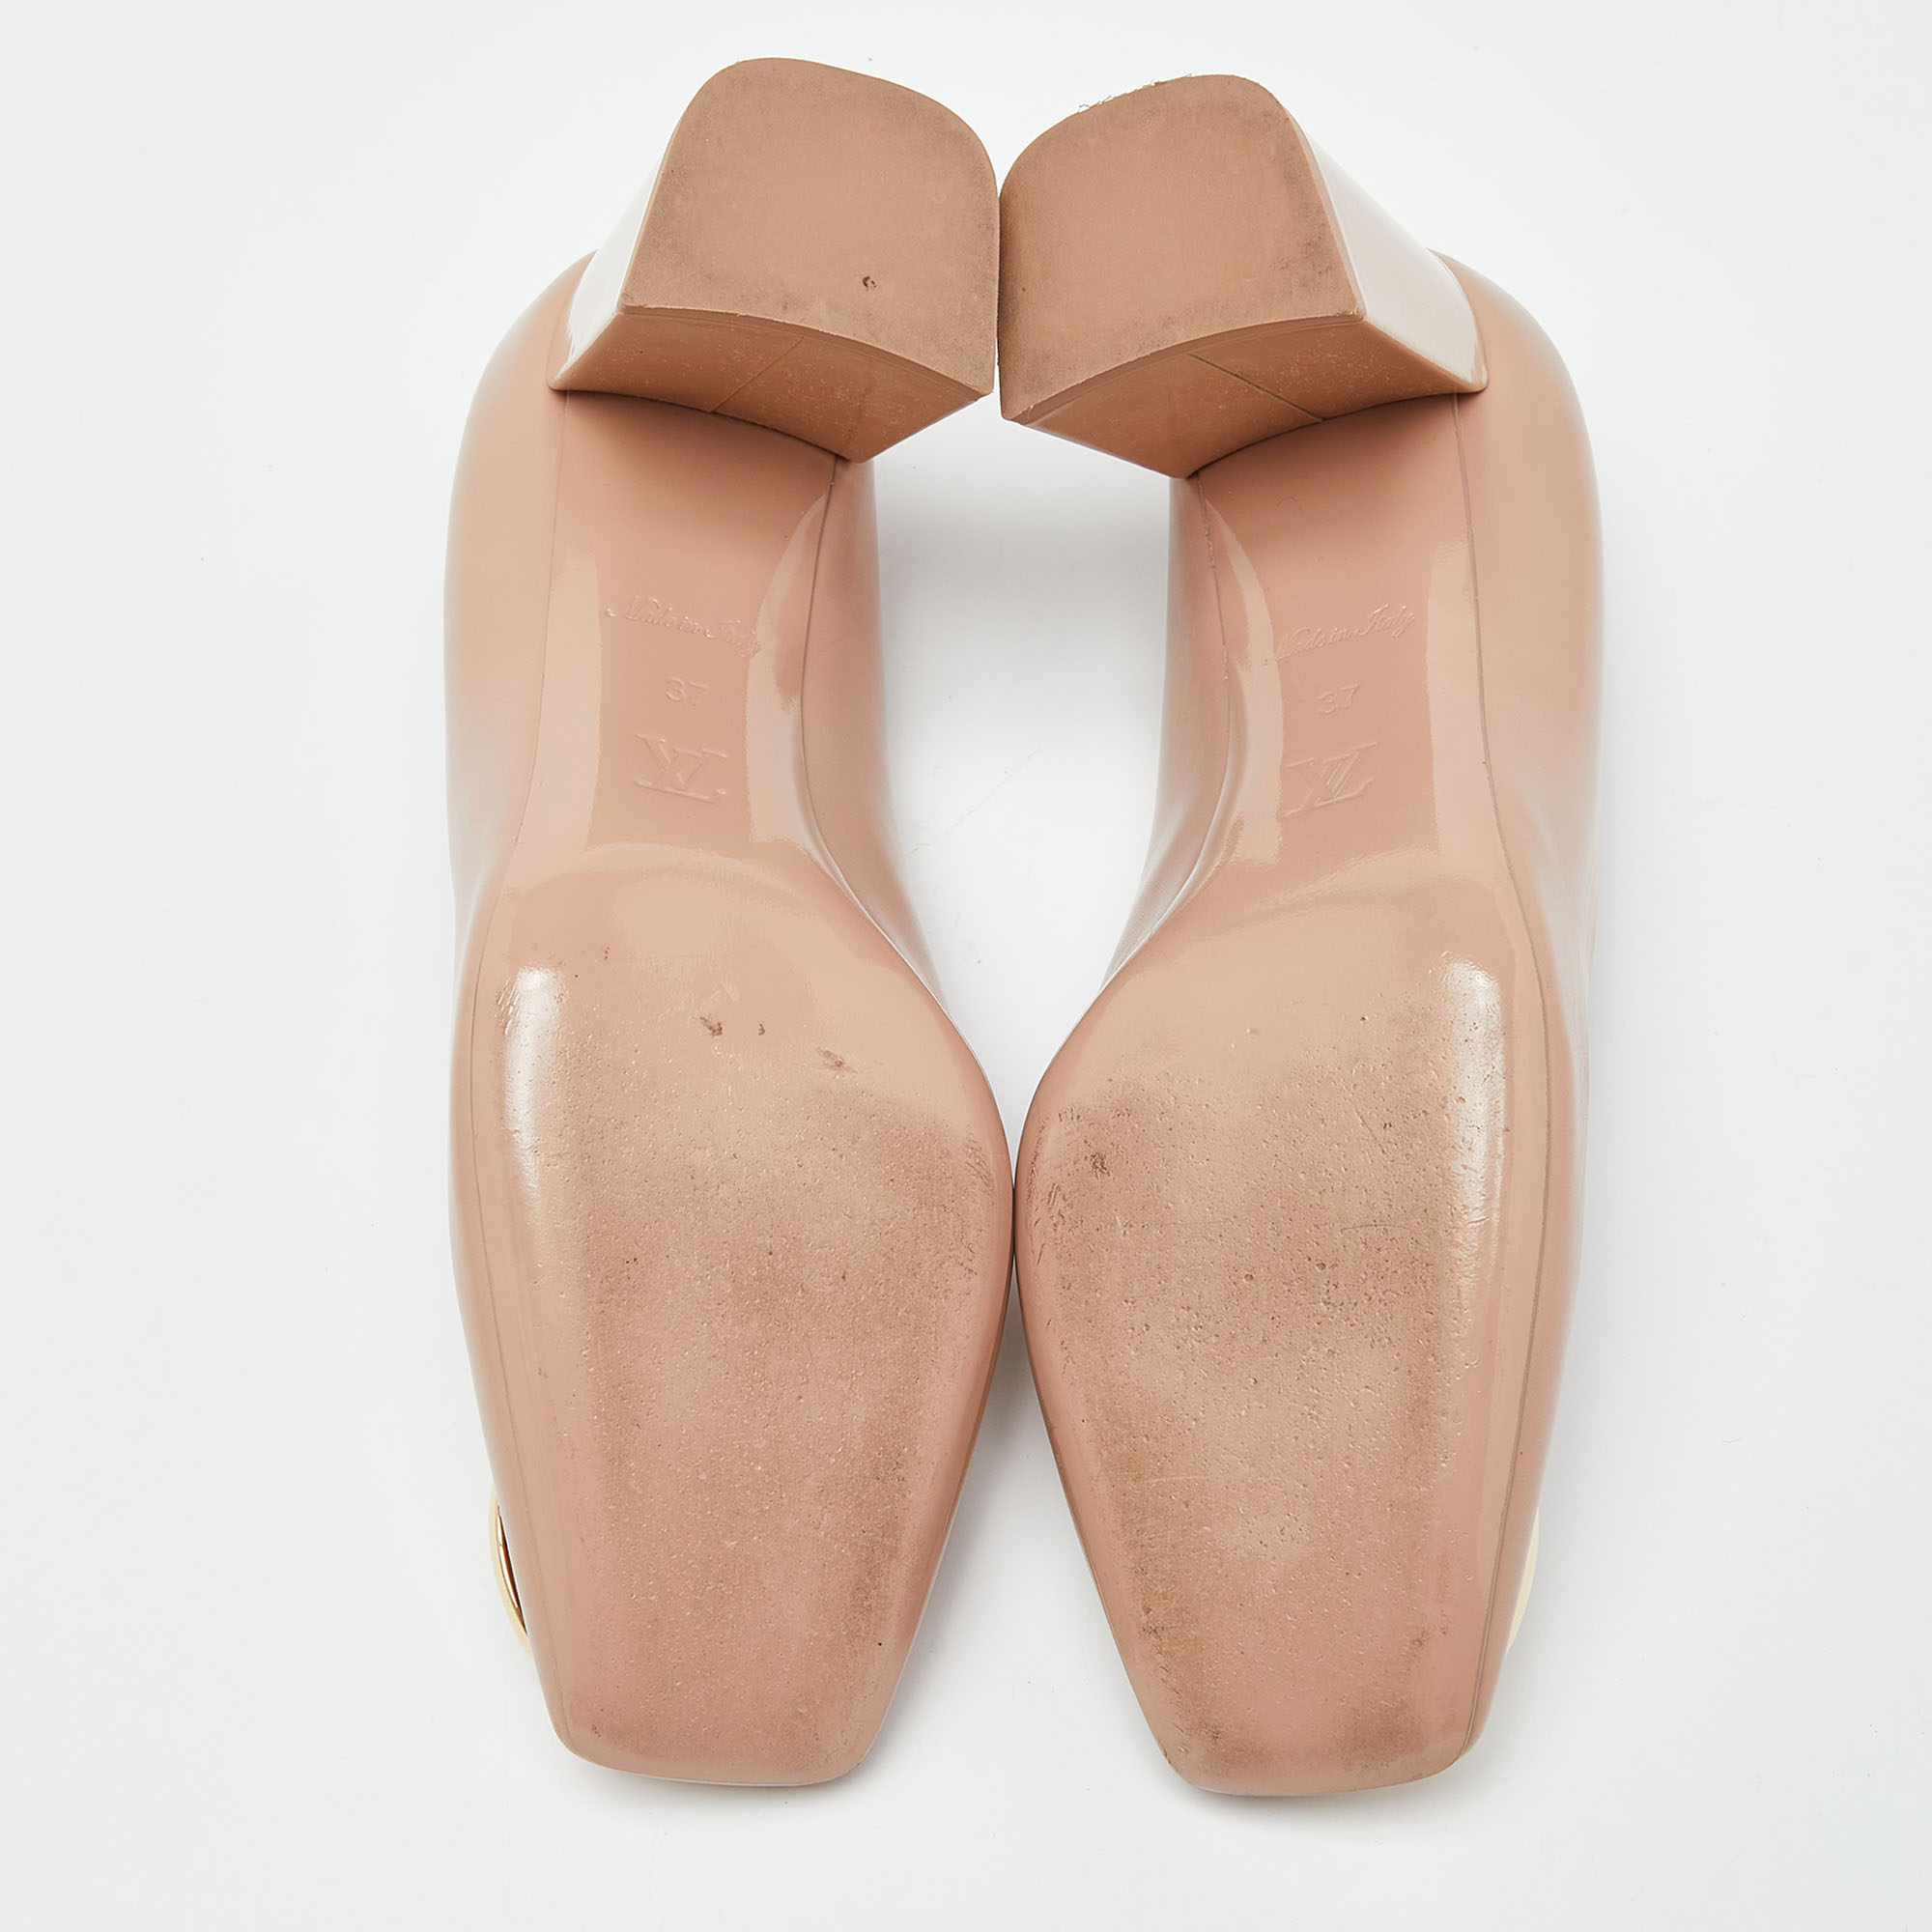 Louis Vuitton Beige Patent Leather Madeleine Square Toe Pumps Size 37